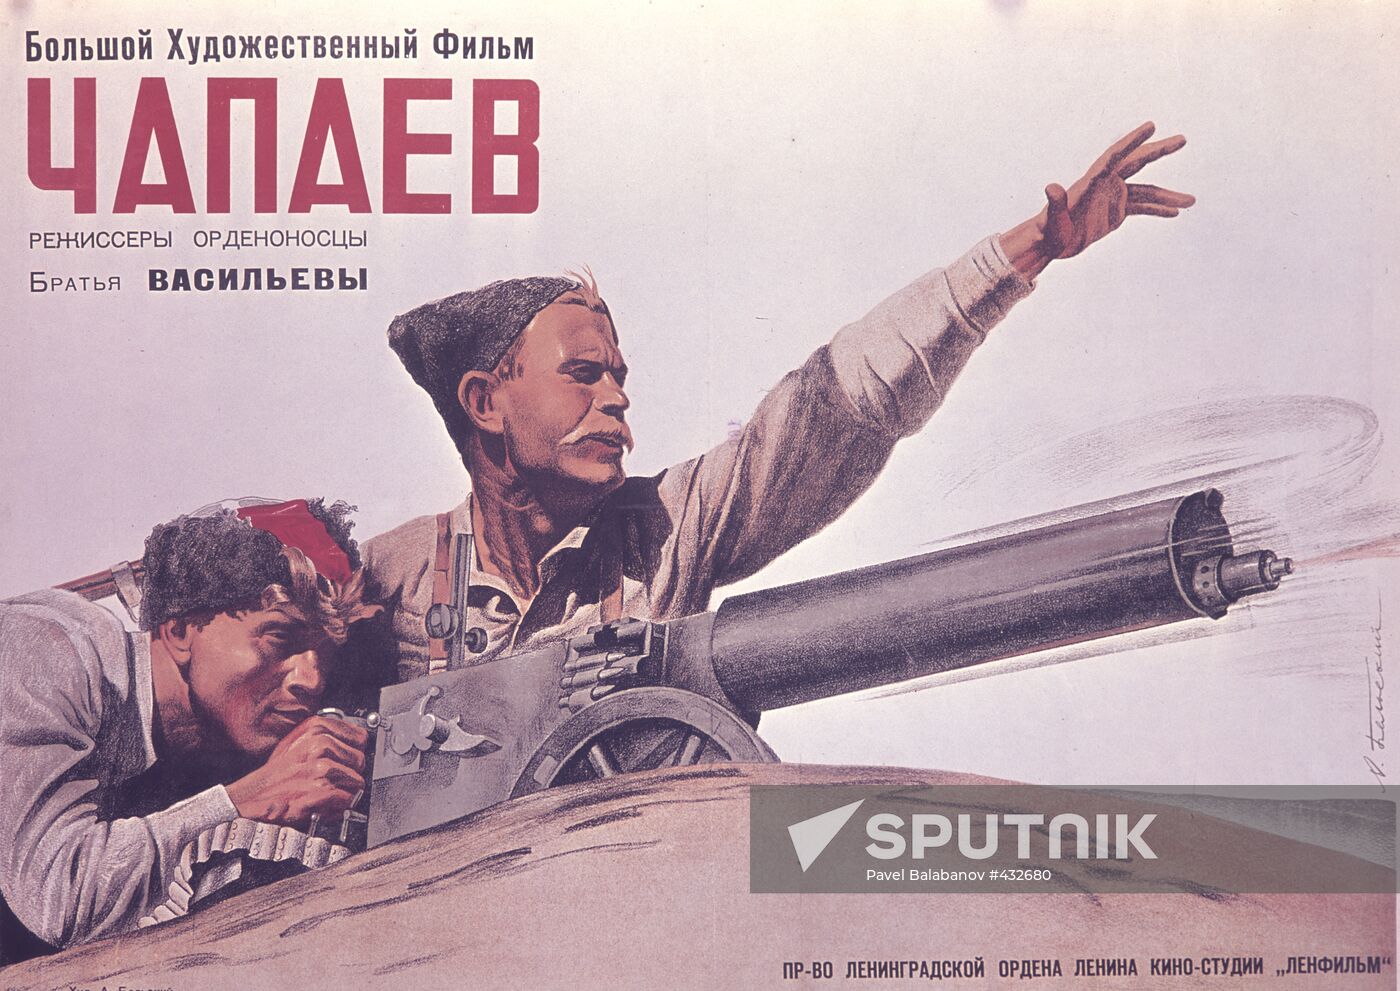 "Chapayev" poster